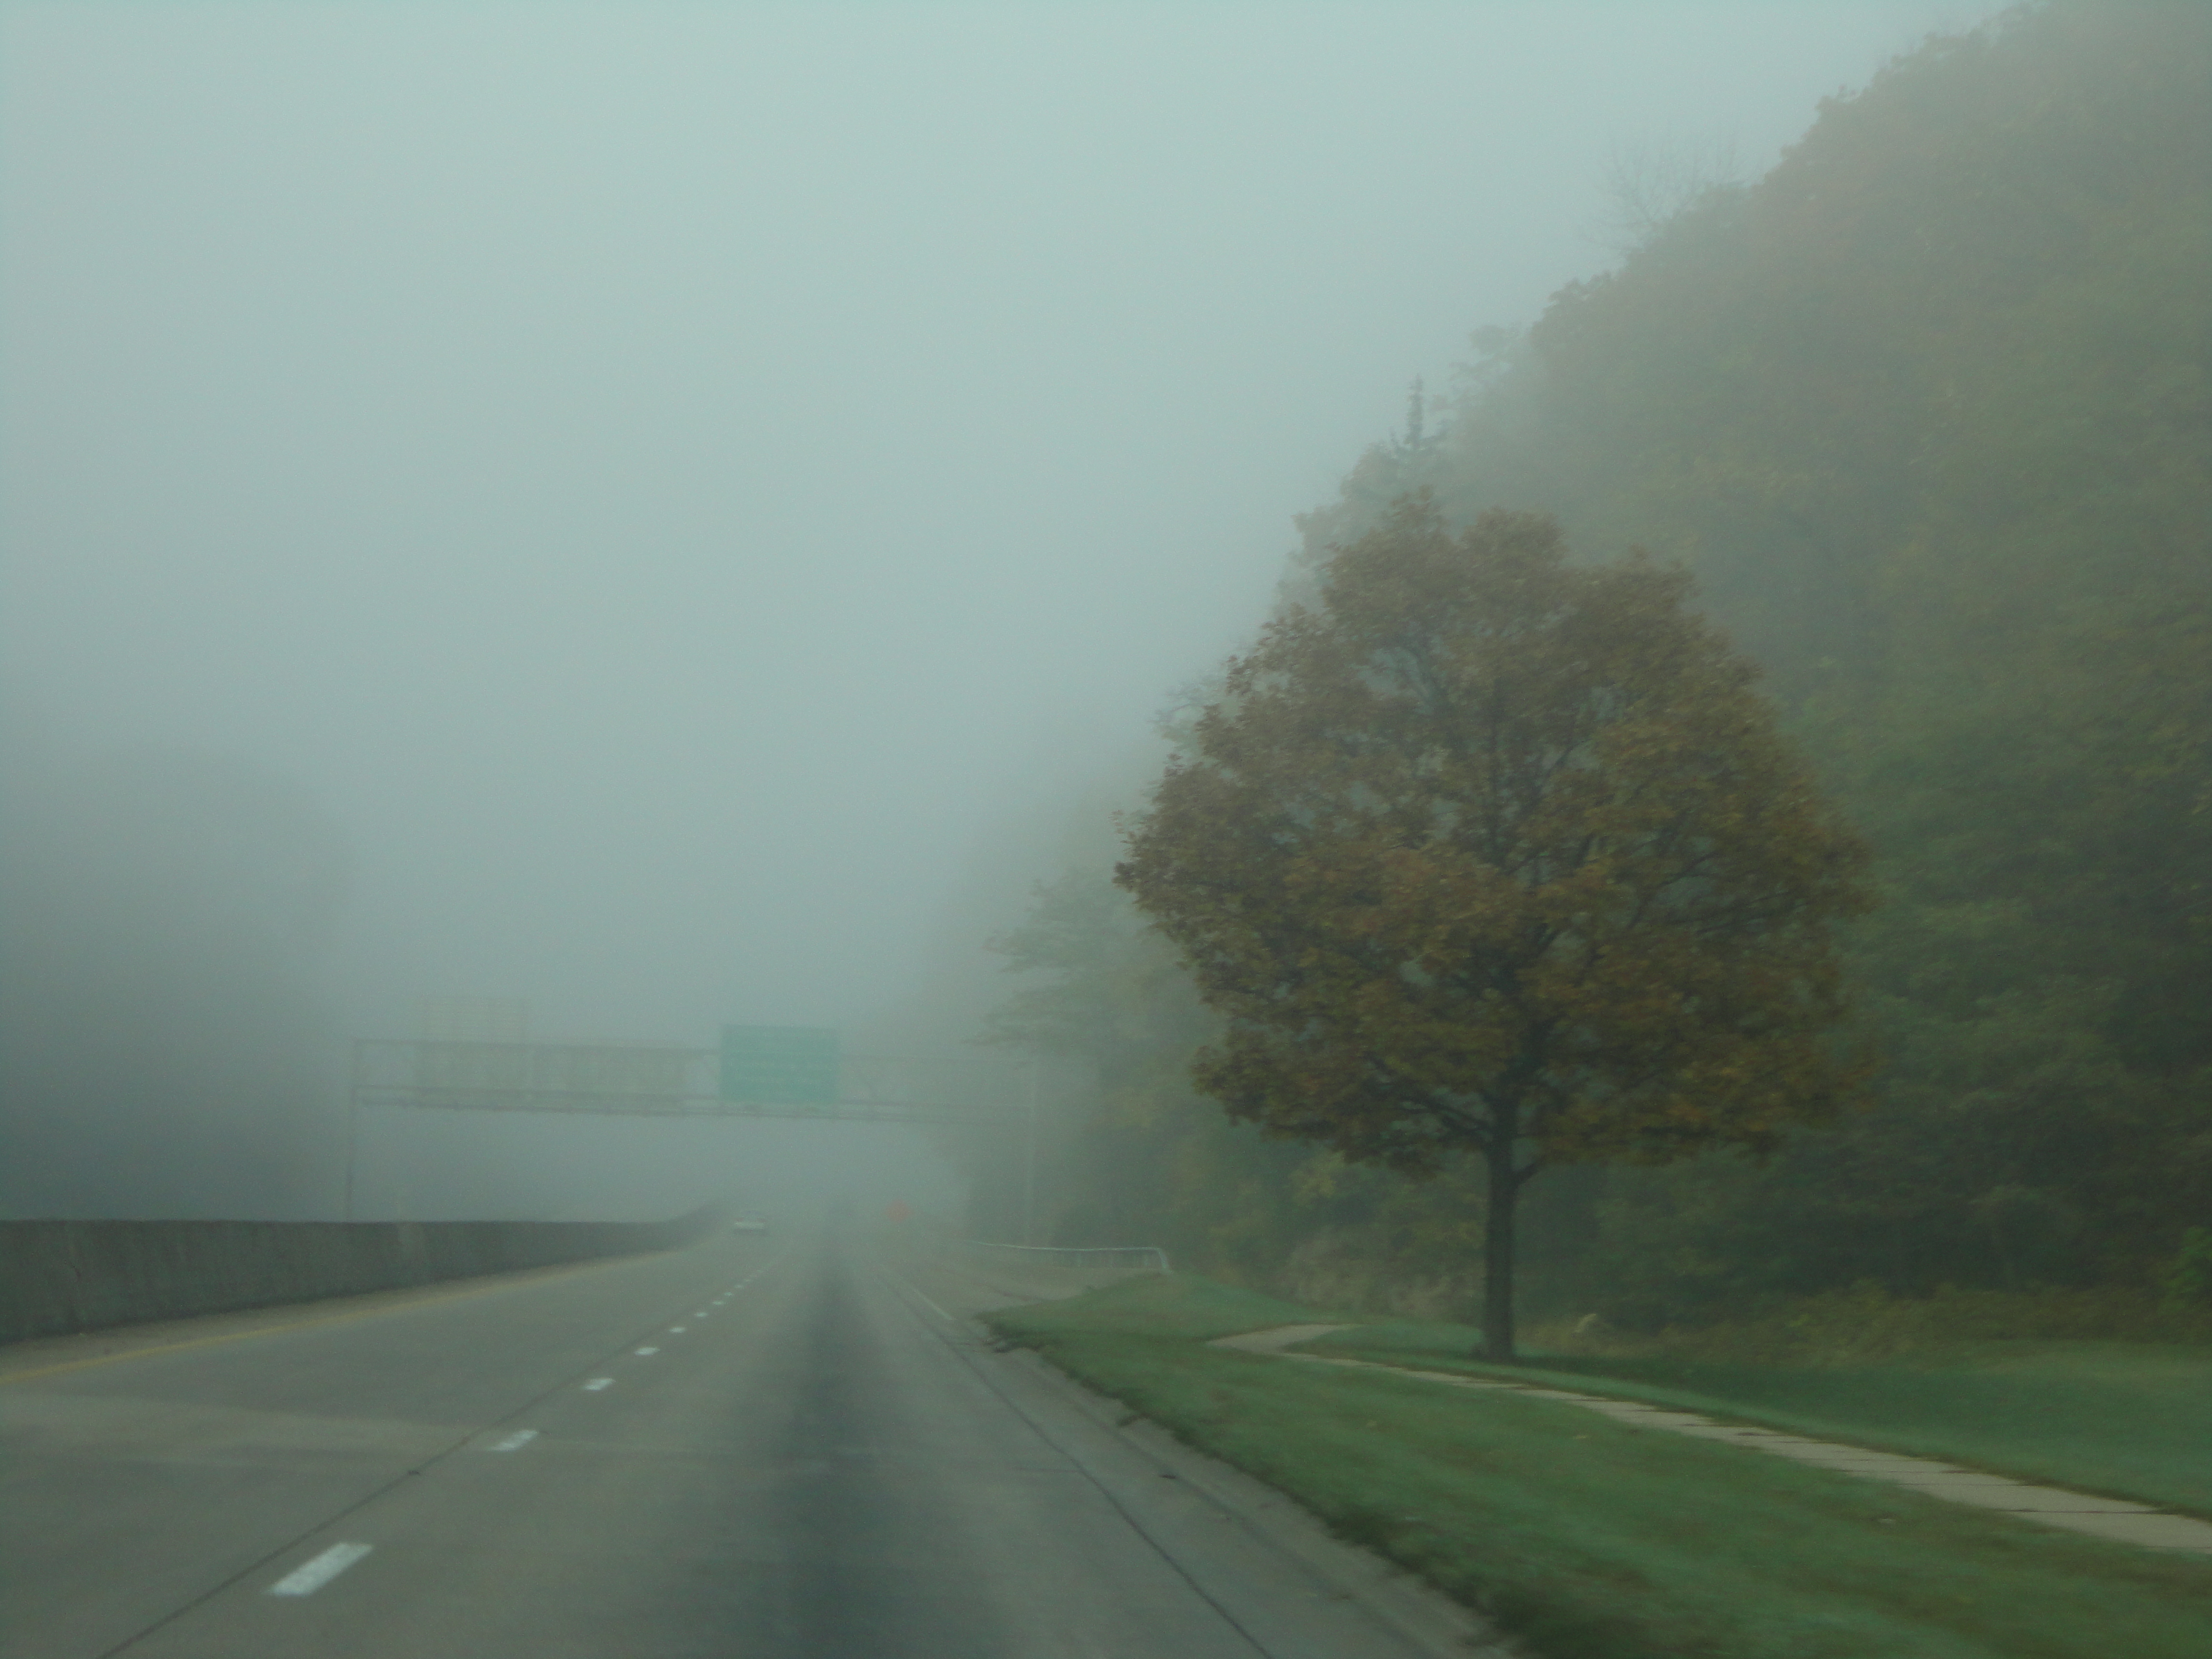 Driving through the mist